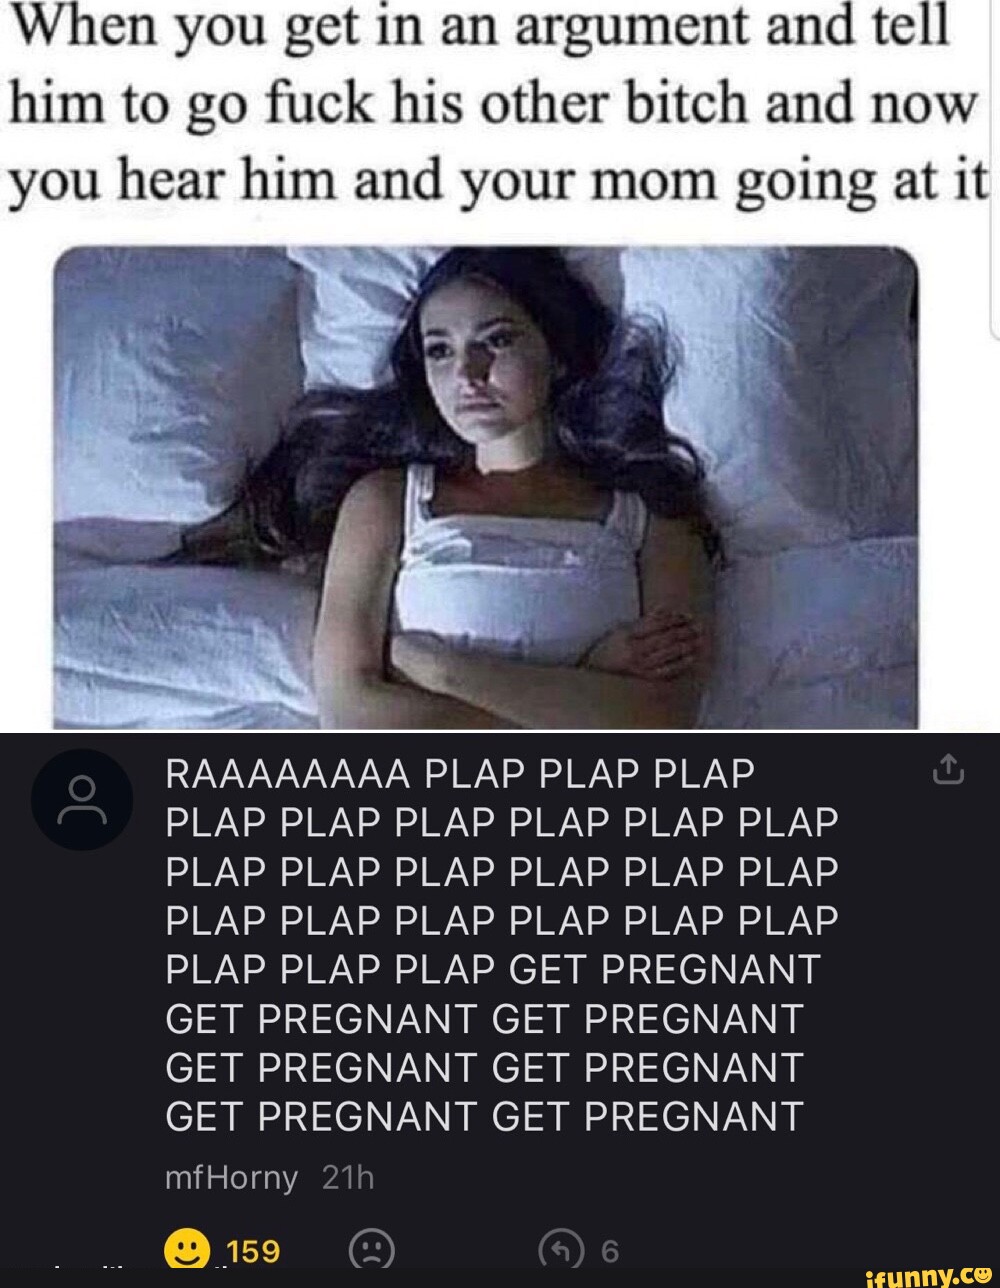 ᴅᴇᴍᴏɴ sʟᴀʏᴇʀ — When you tell him you're pregnant while doing